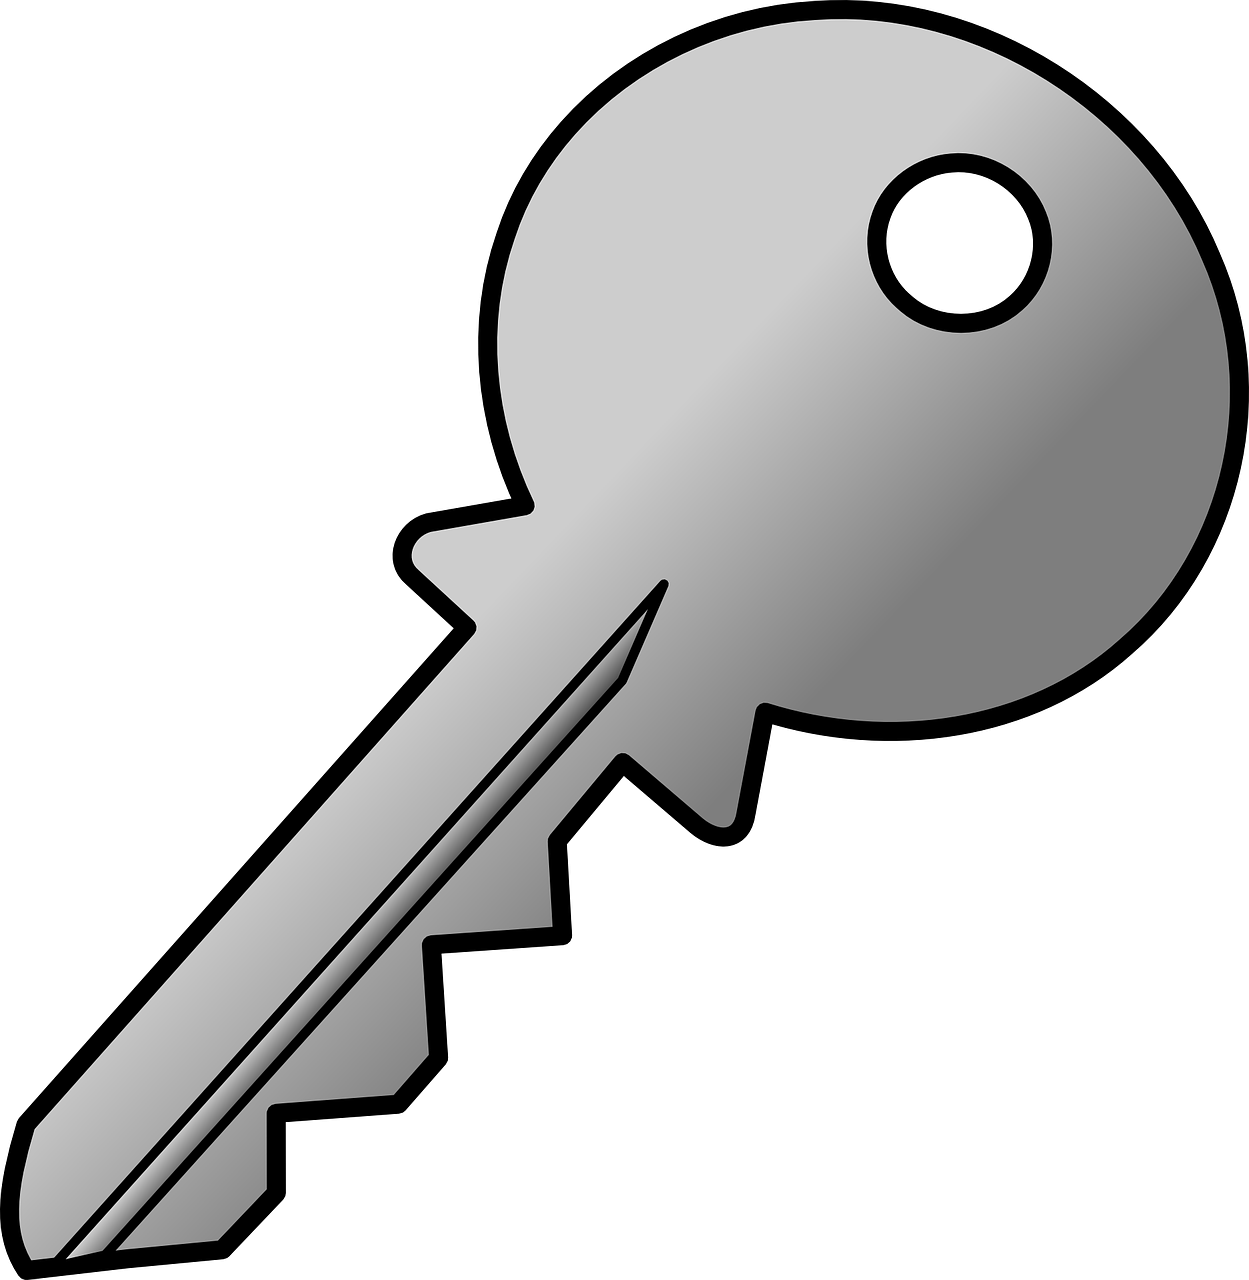 Ключи без смс. Ключ. Ключ нарисованный. Изображение ключа. Ключ вектор.